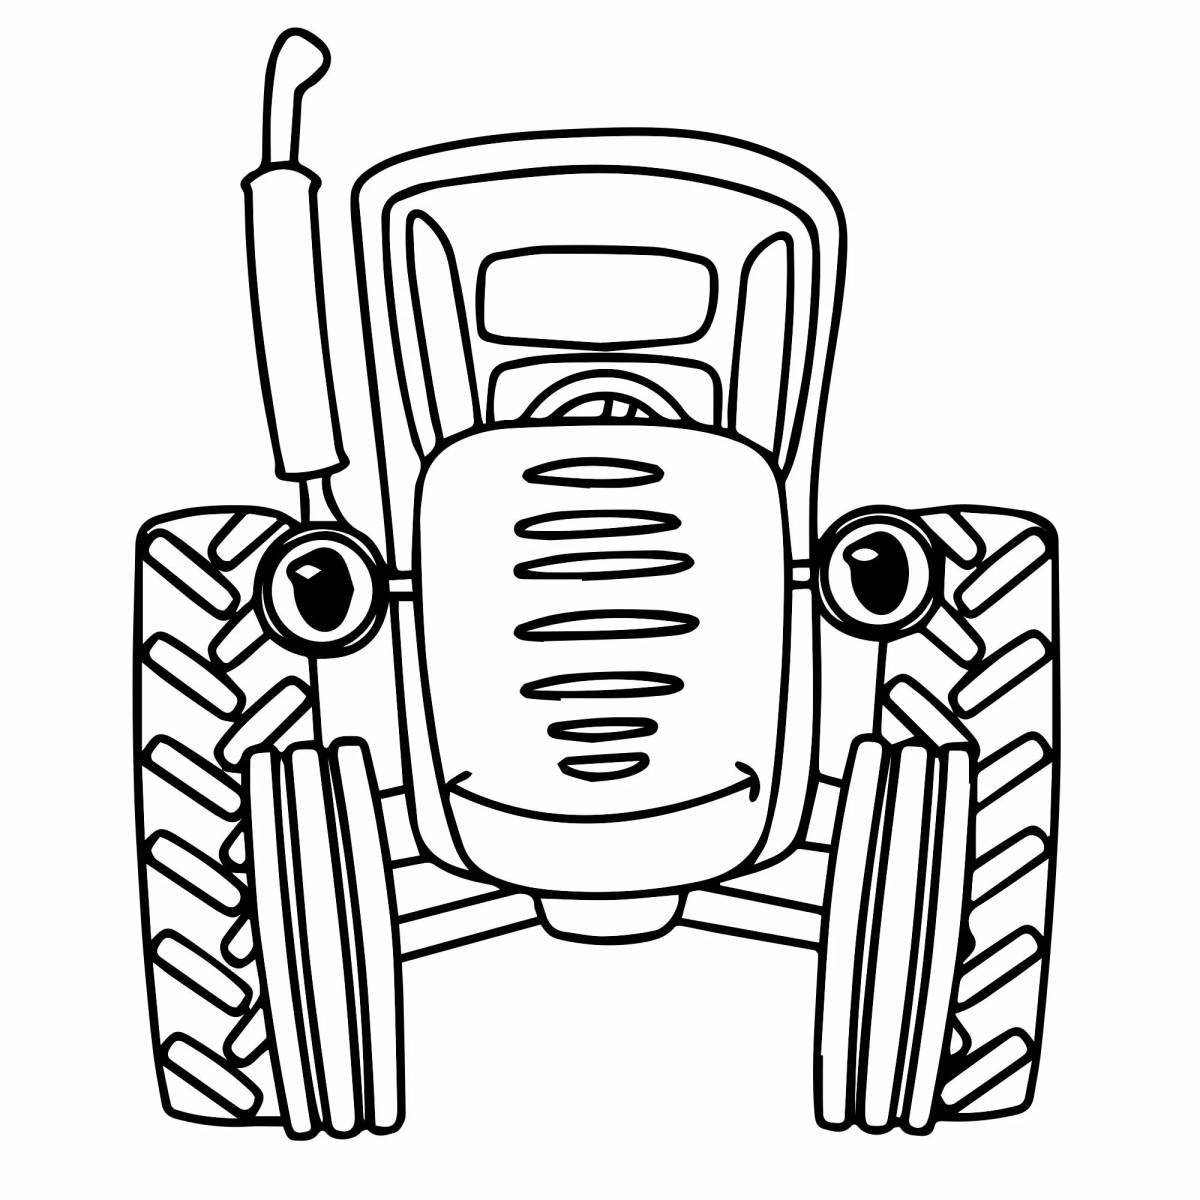 Adorable blue tractor clip-art